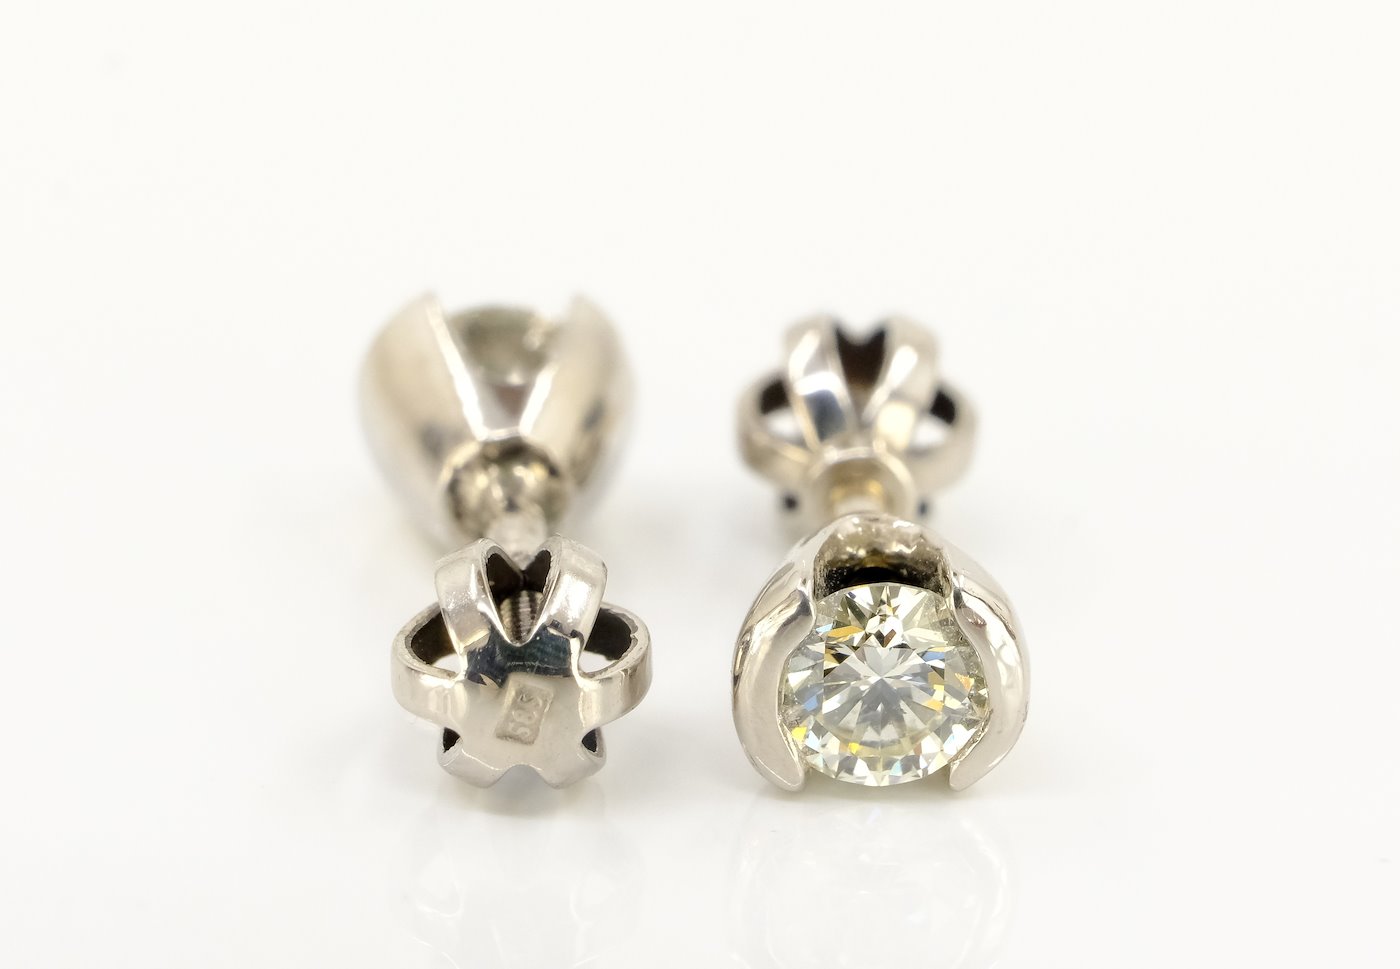 Anton Schwartz - Náušnice s diamanty bodové osazené diamanty 2x 0,30 ct J/VS, VG zlato 585/1000, hrubá hmotnost 1,78 g